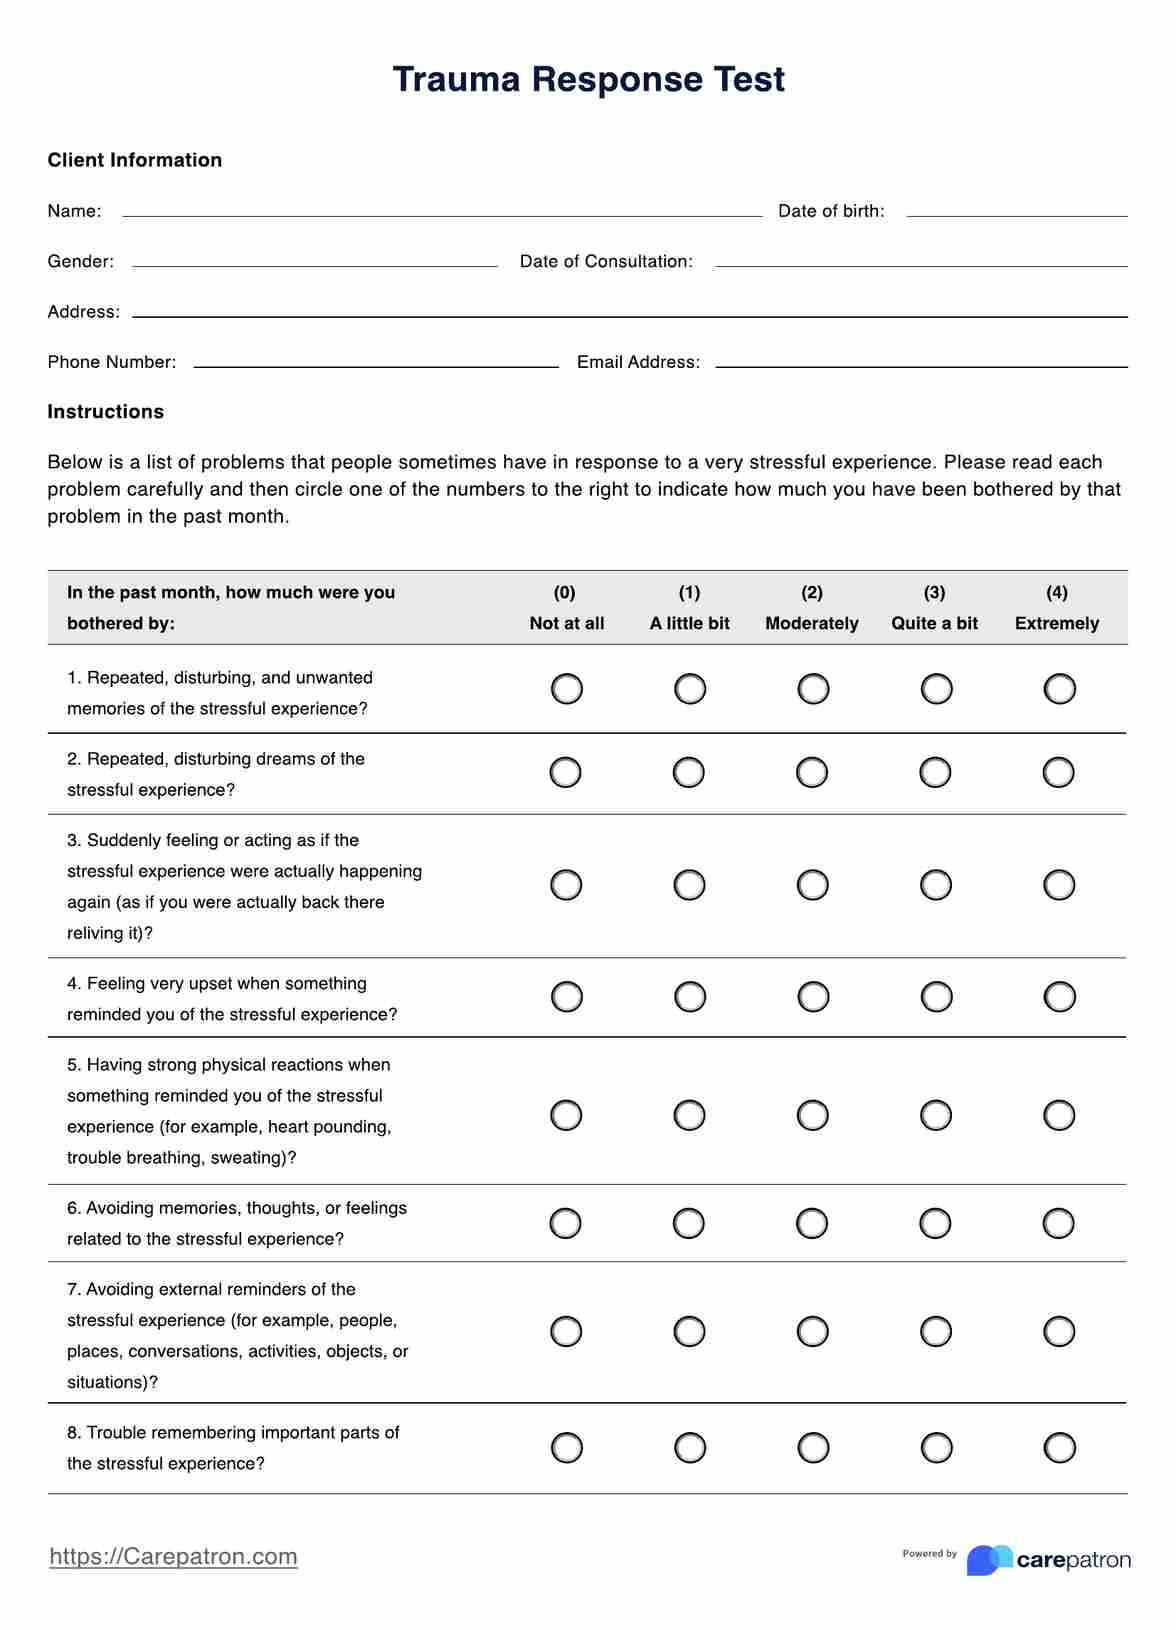 Trauma Response Test PDF Example